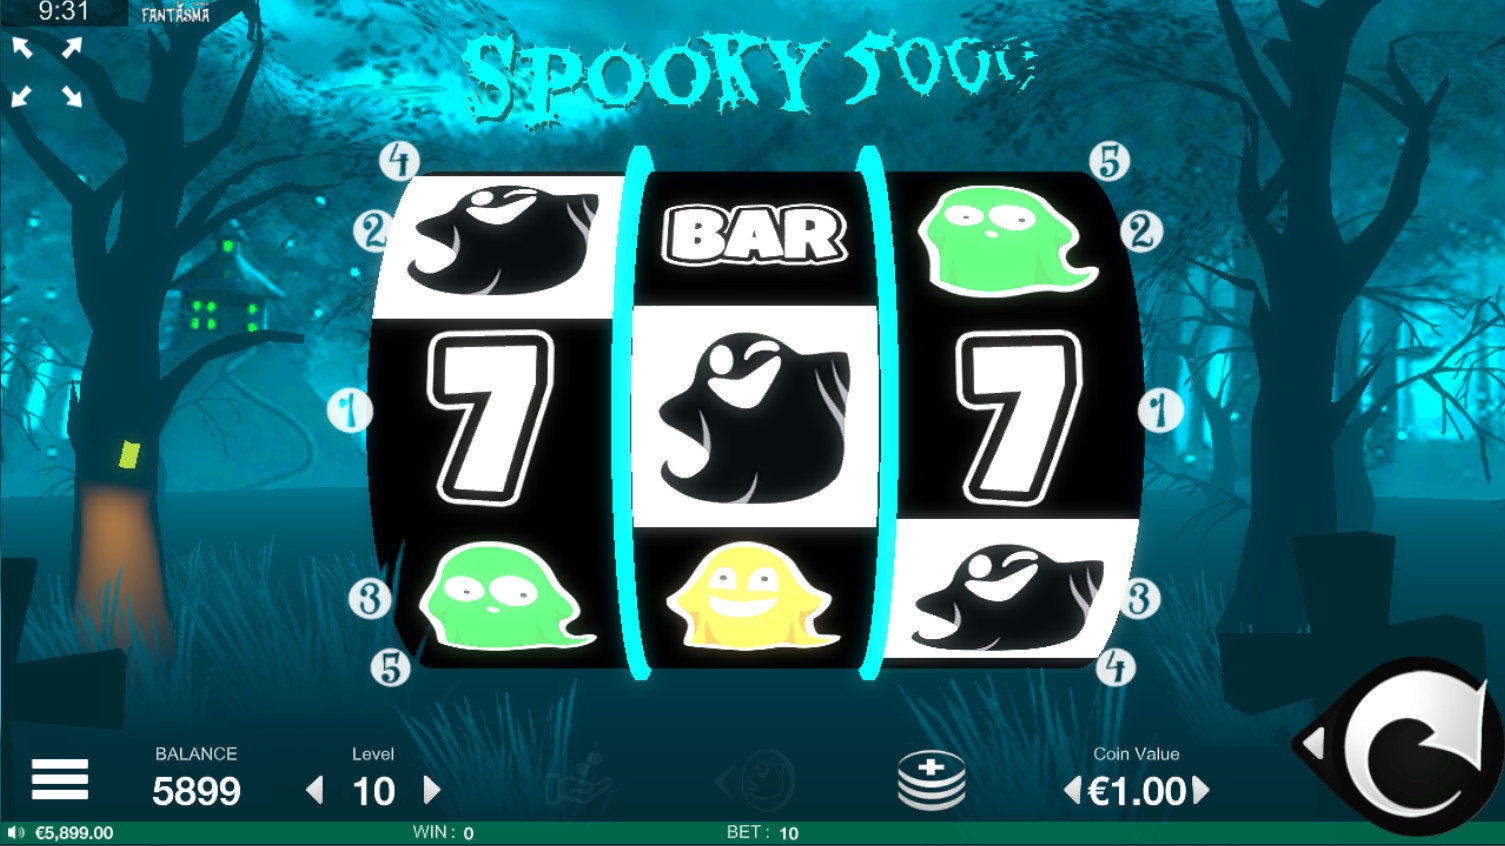 Spooky 5000 (Spooky 5000) from category Slots